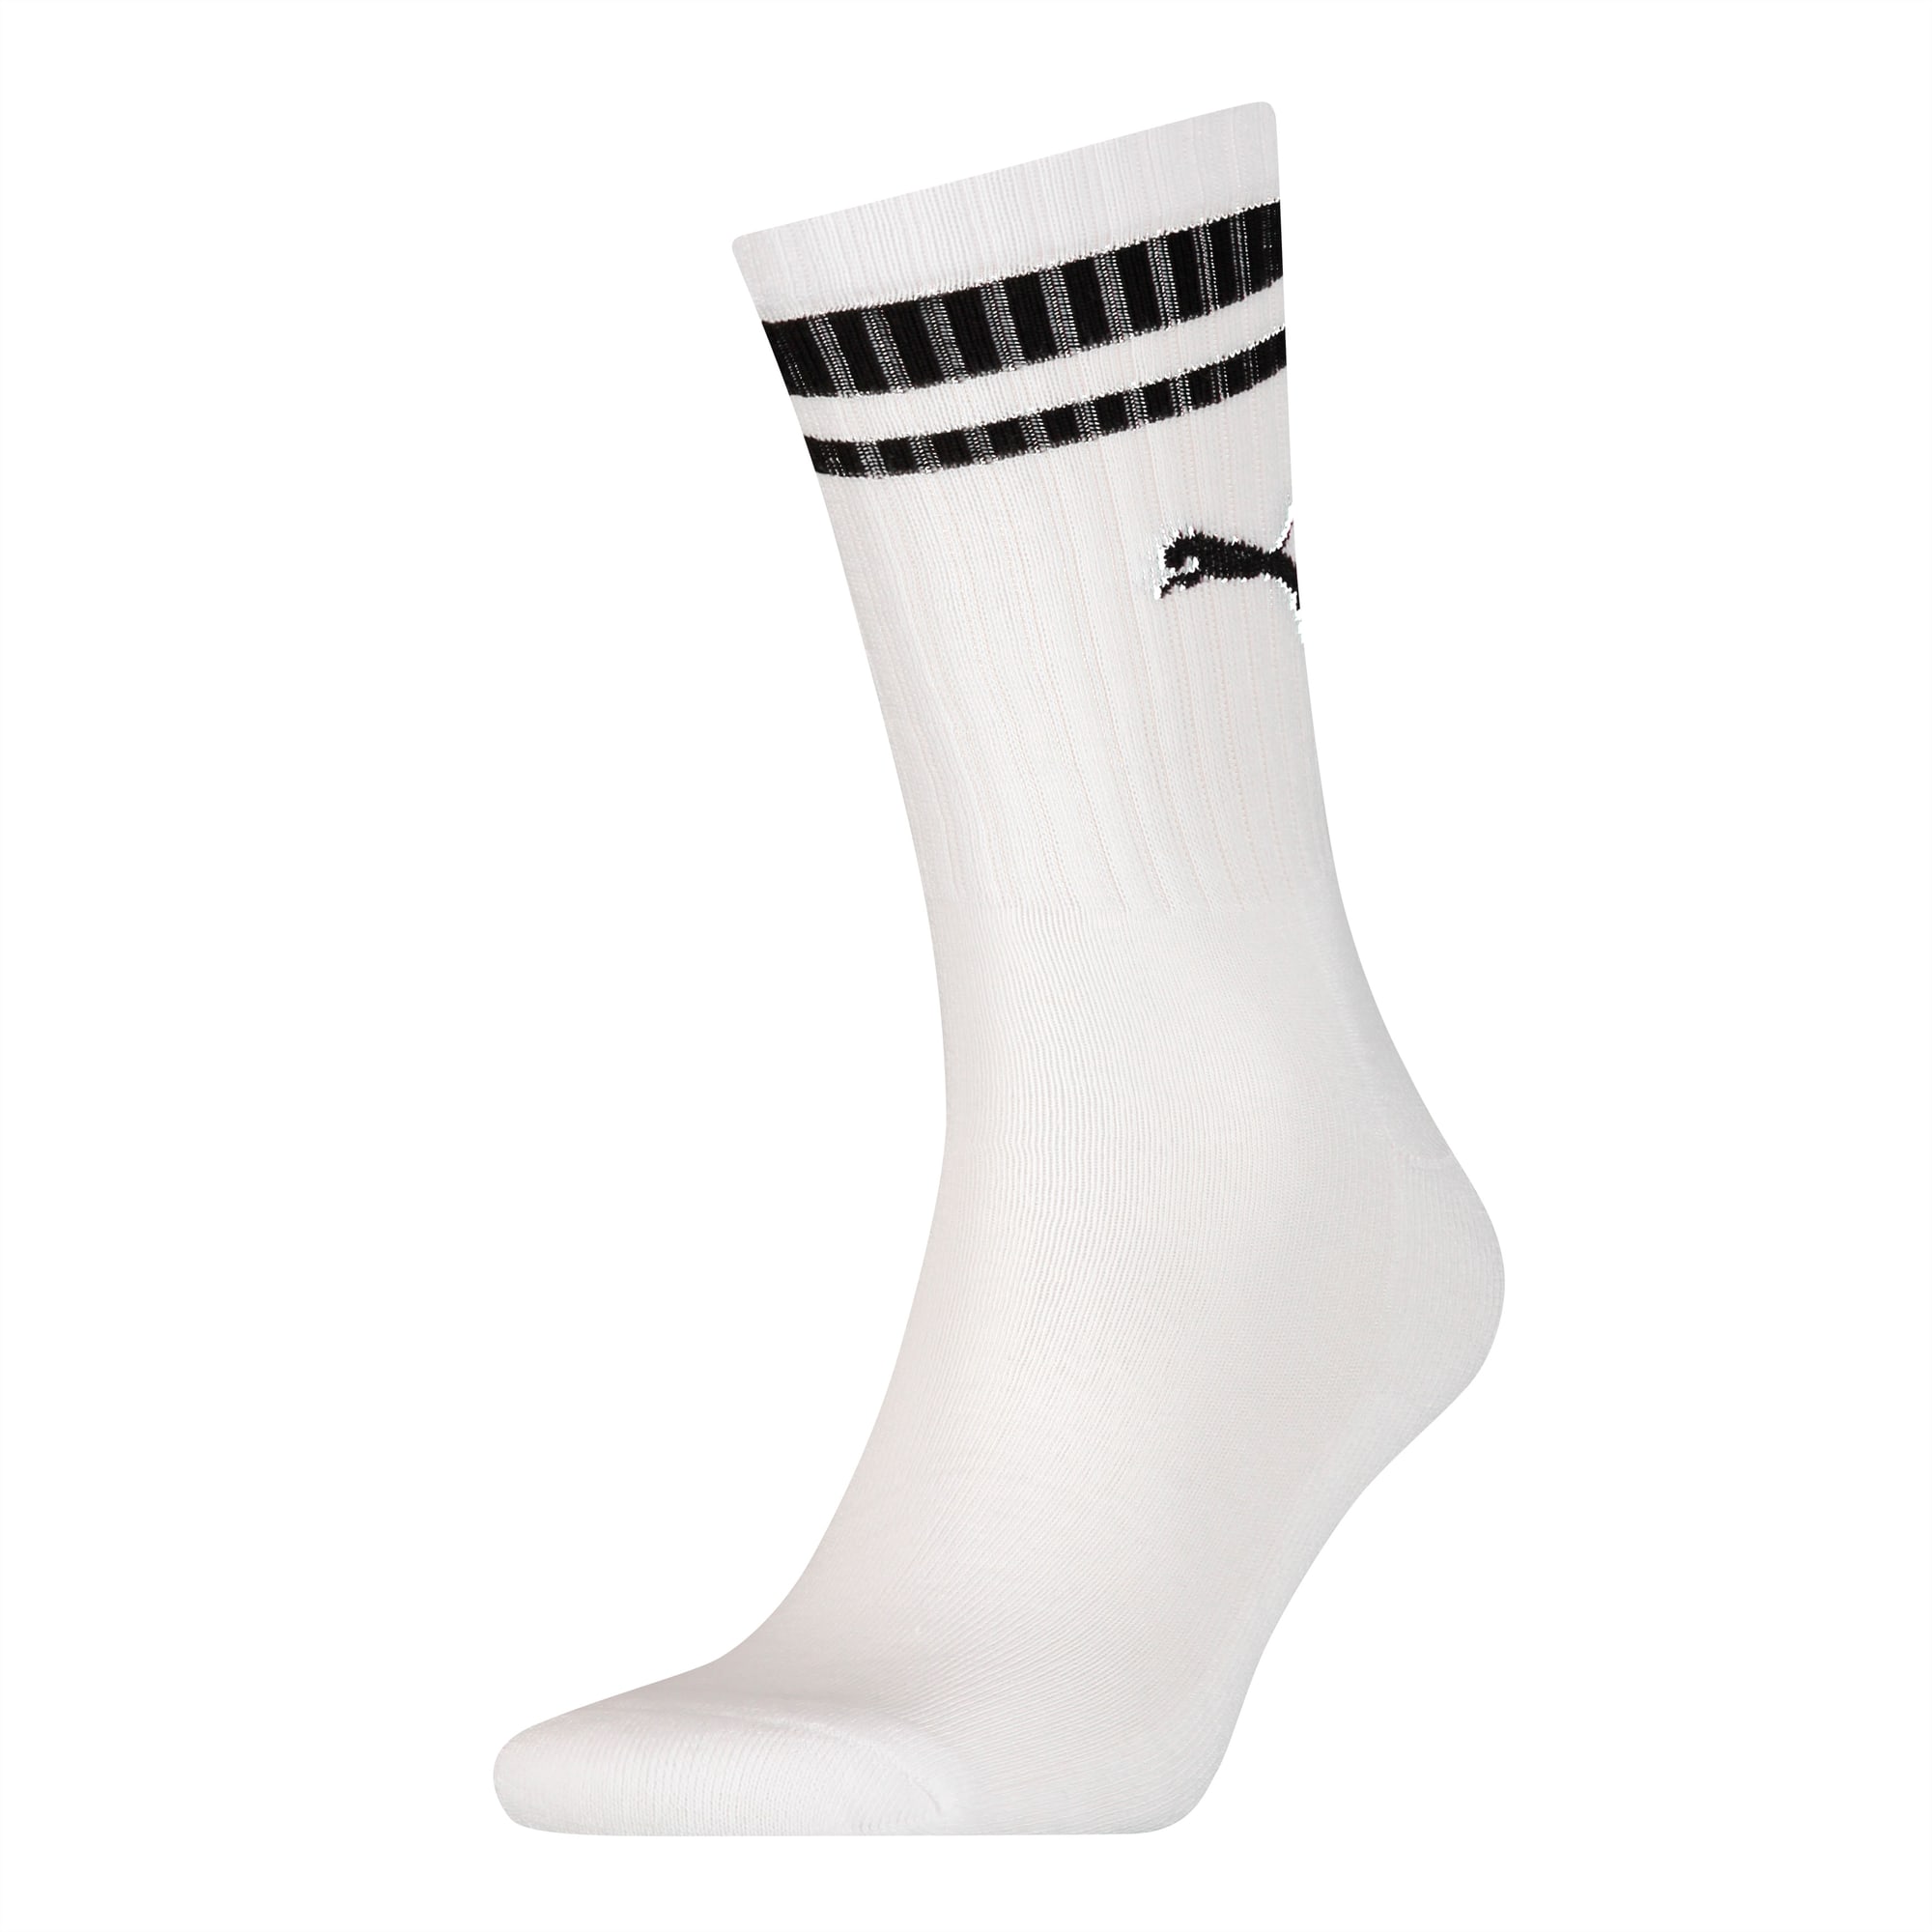 Basic Trainers Socks 1 Pack, white, large-SEA